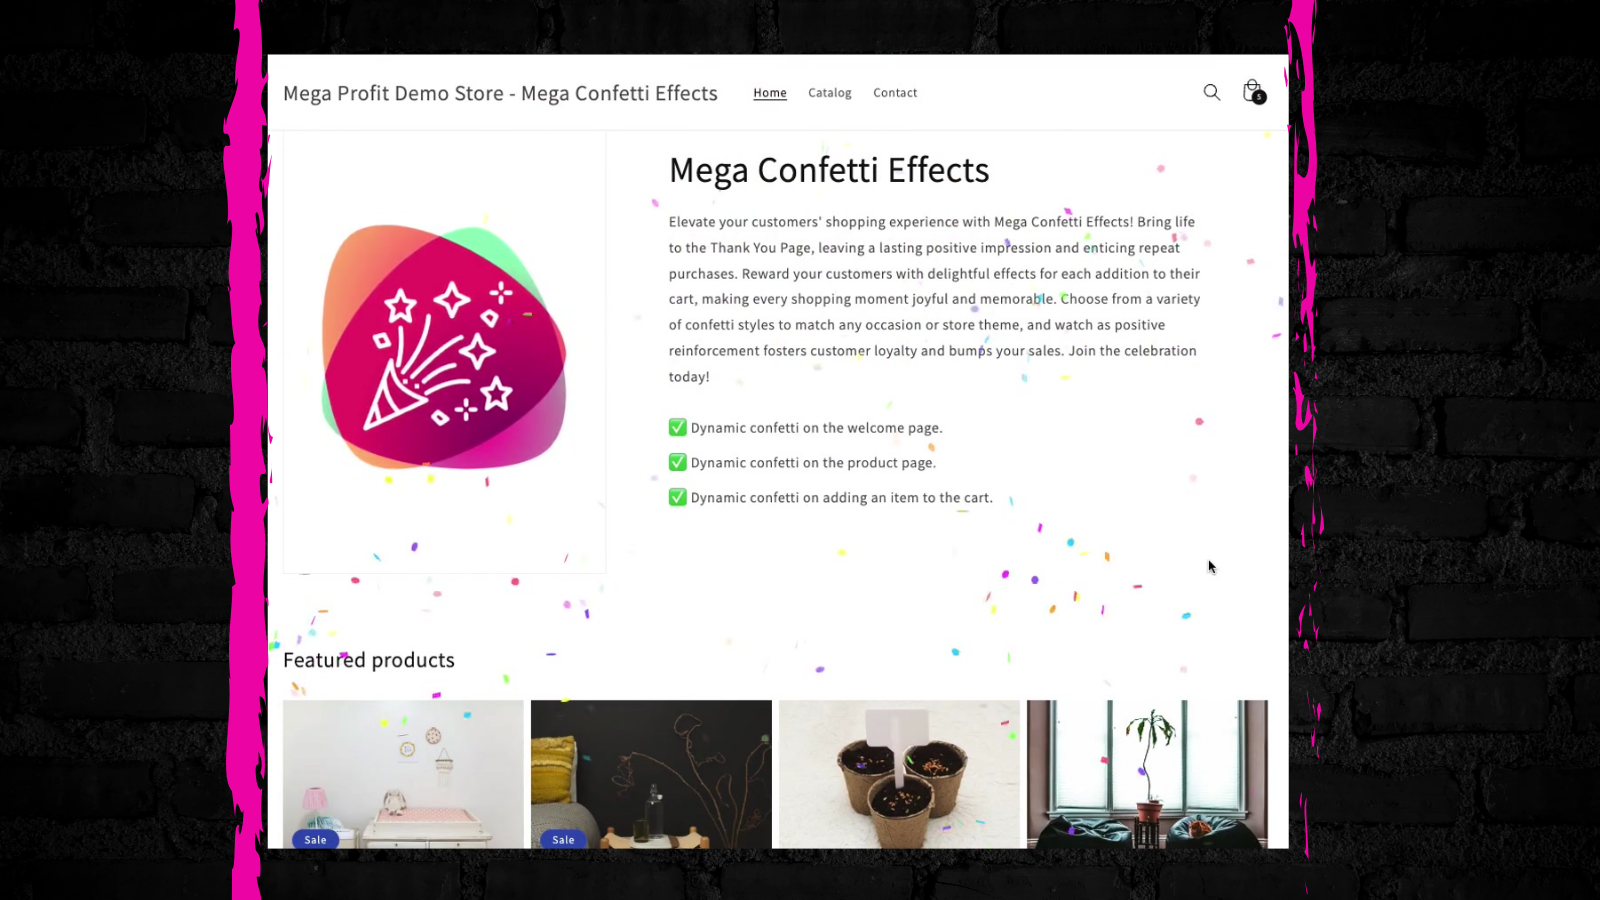 Mega Confetti Effects - Forbedre kunde engagement